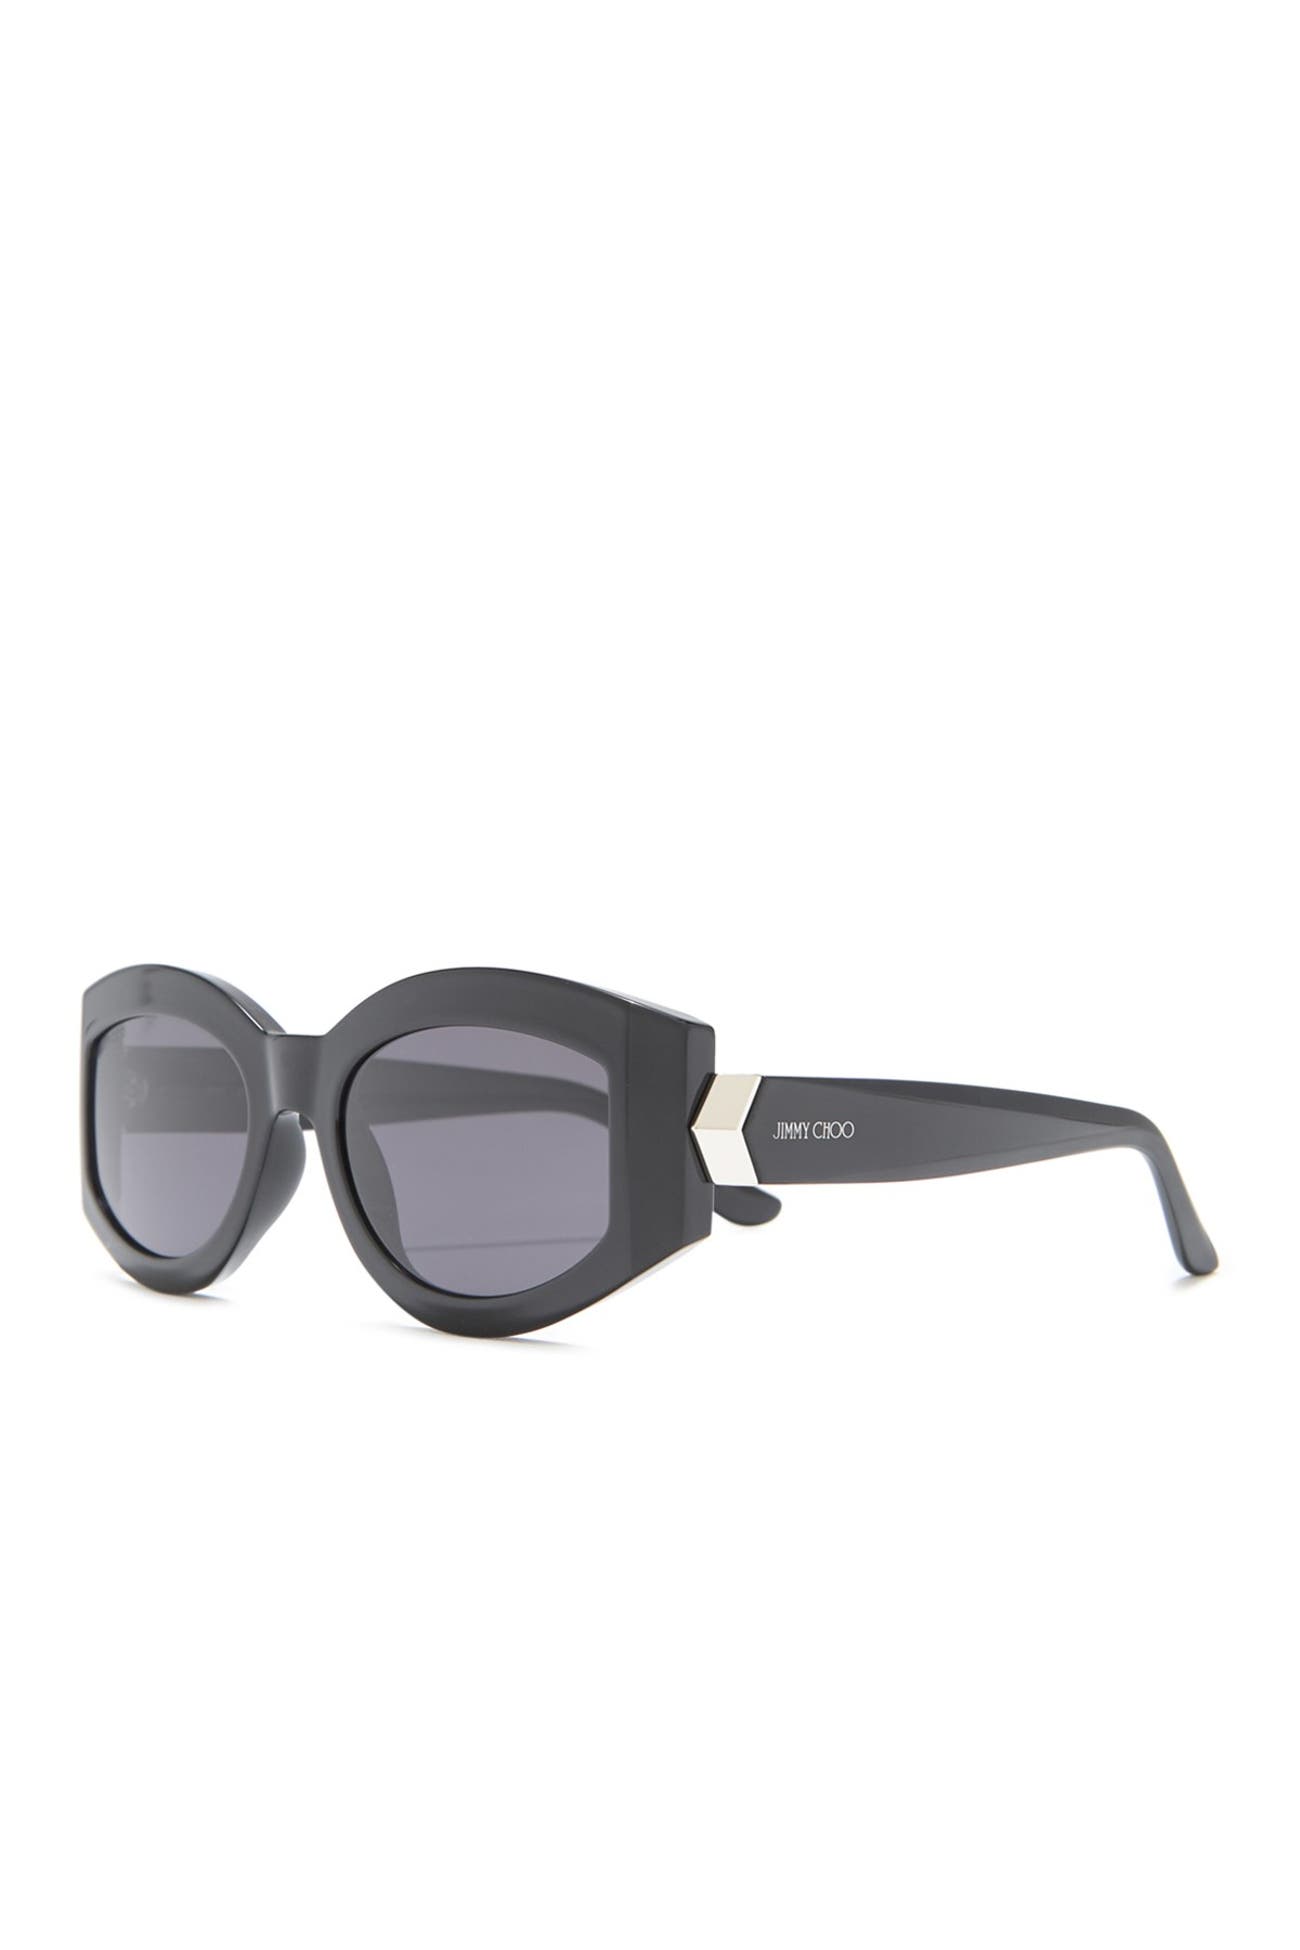 Jimmy Choo | 52mm Robyns Cat Eye Sunglasses | Nordstrom Rack